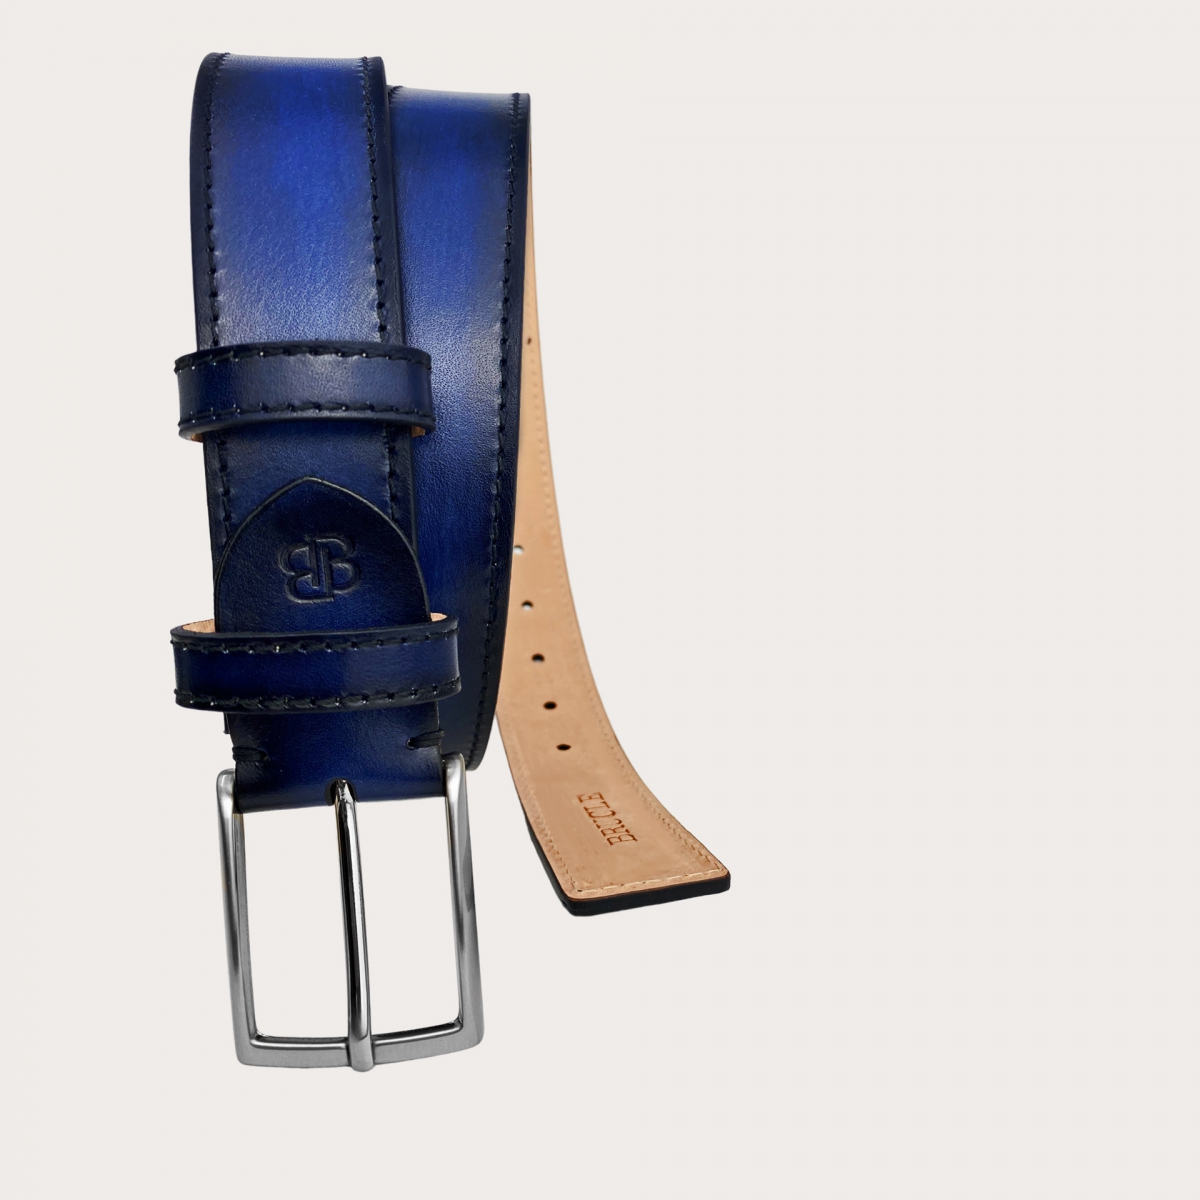 Genuine handbuffered leather belt, blue shaded black